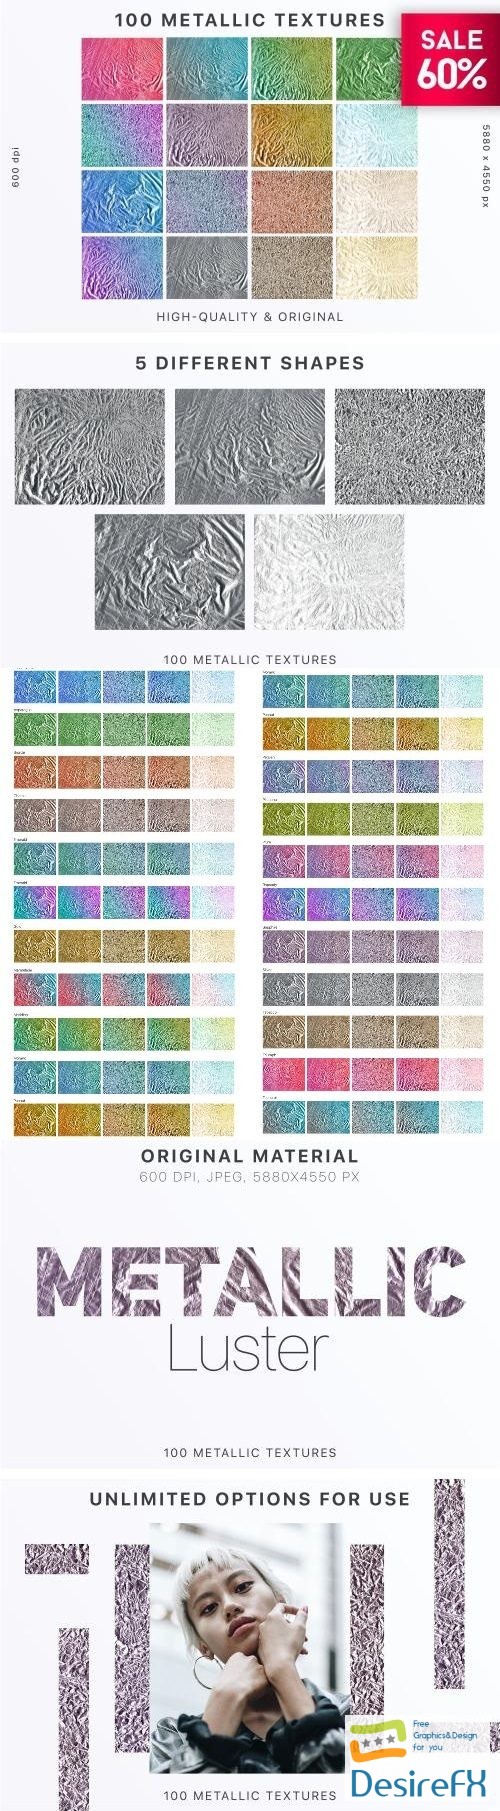 100 Original Metallic Textures - 2270594